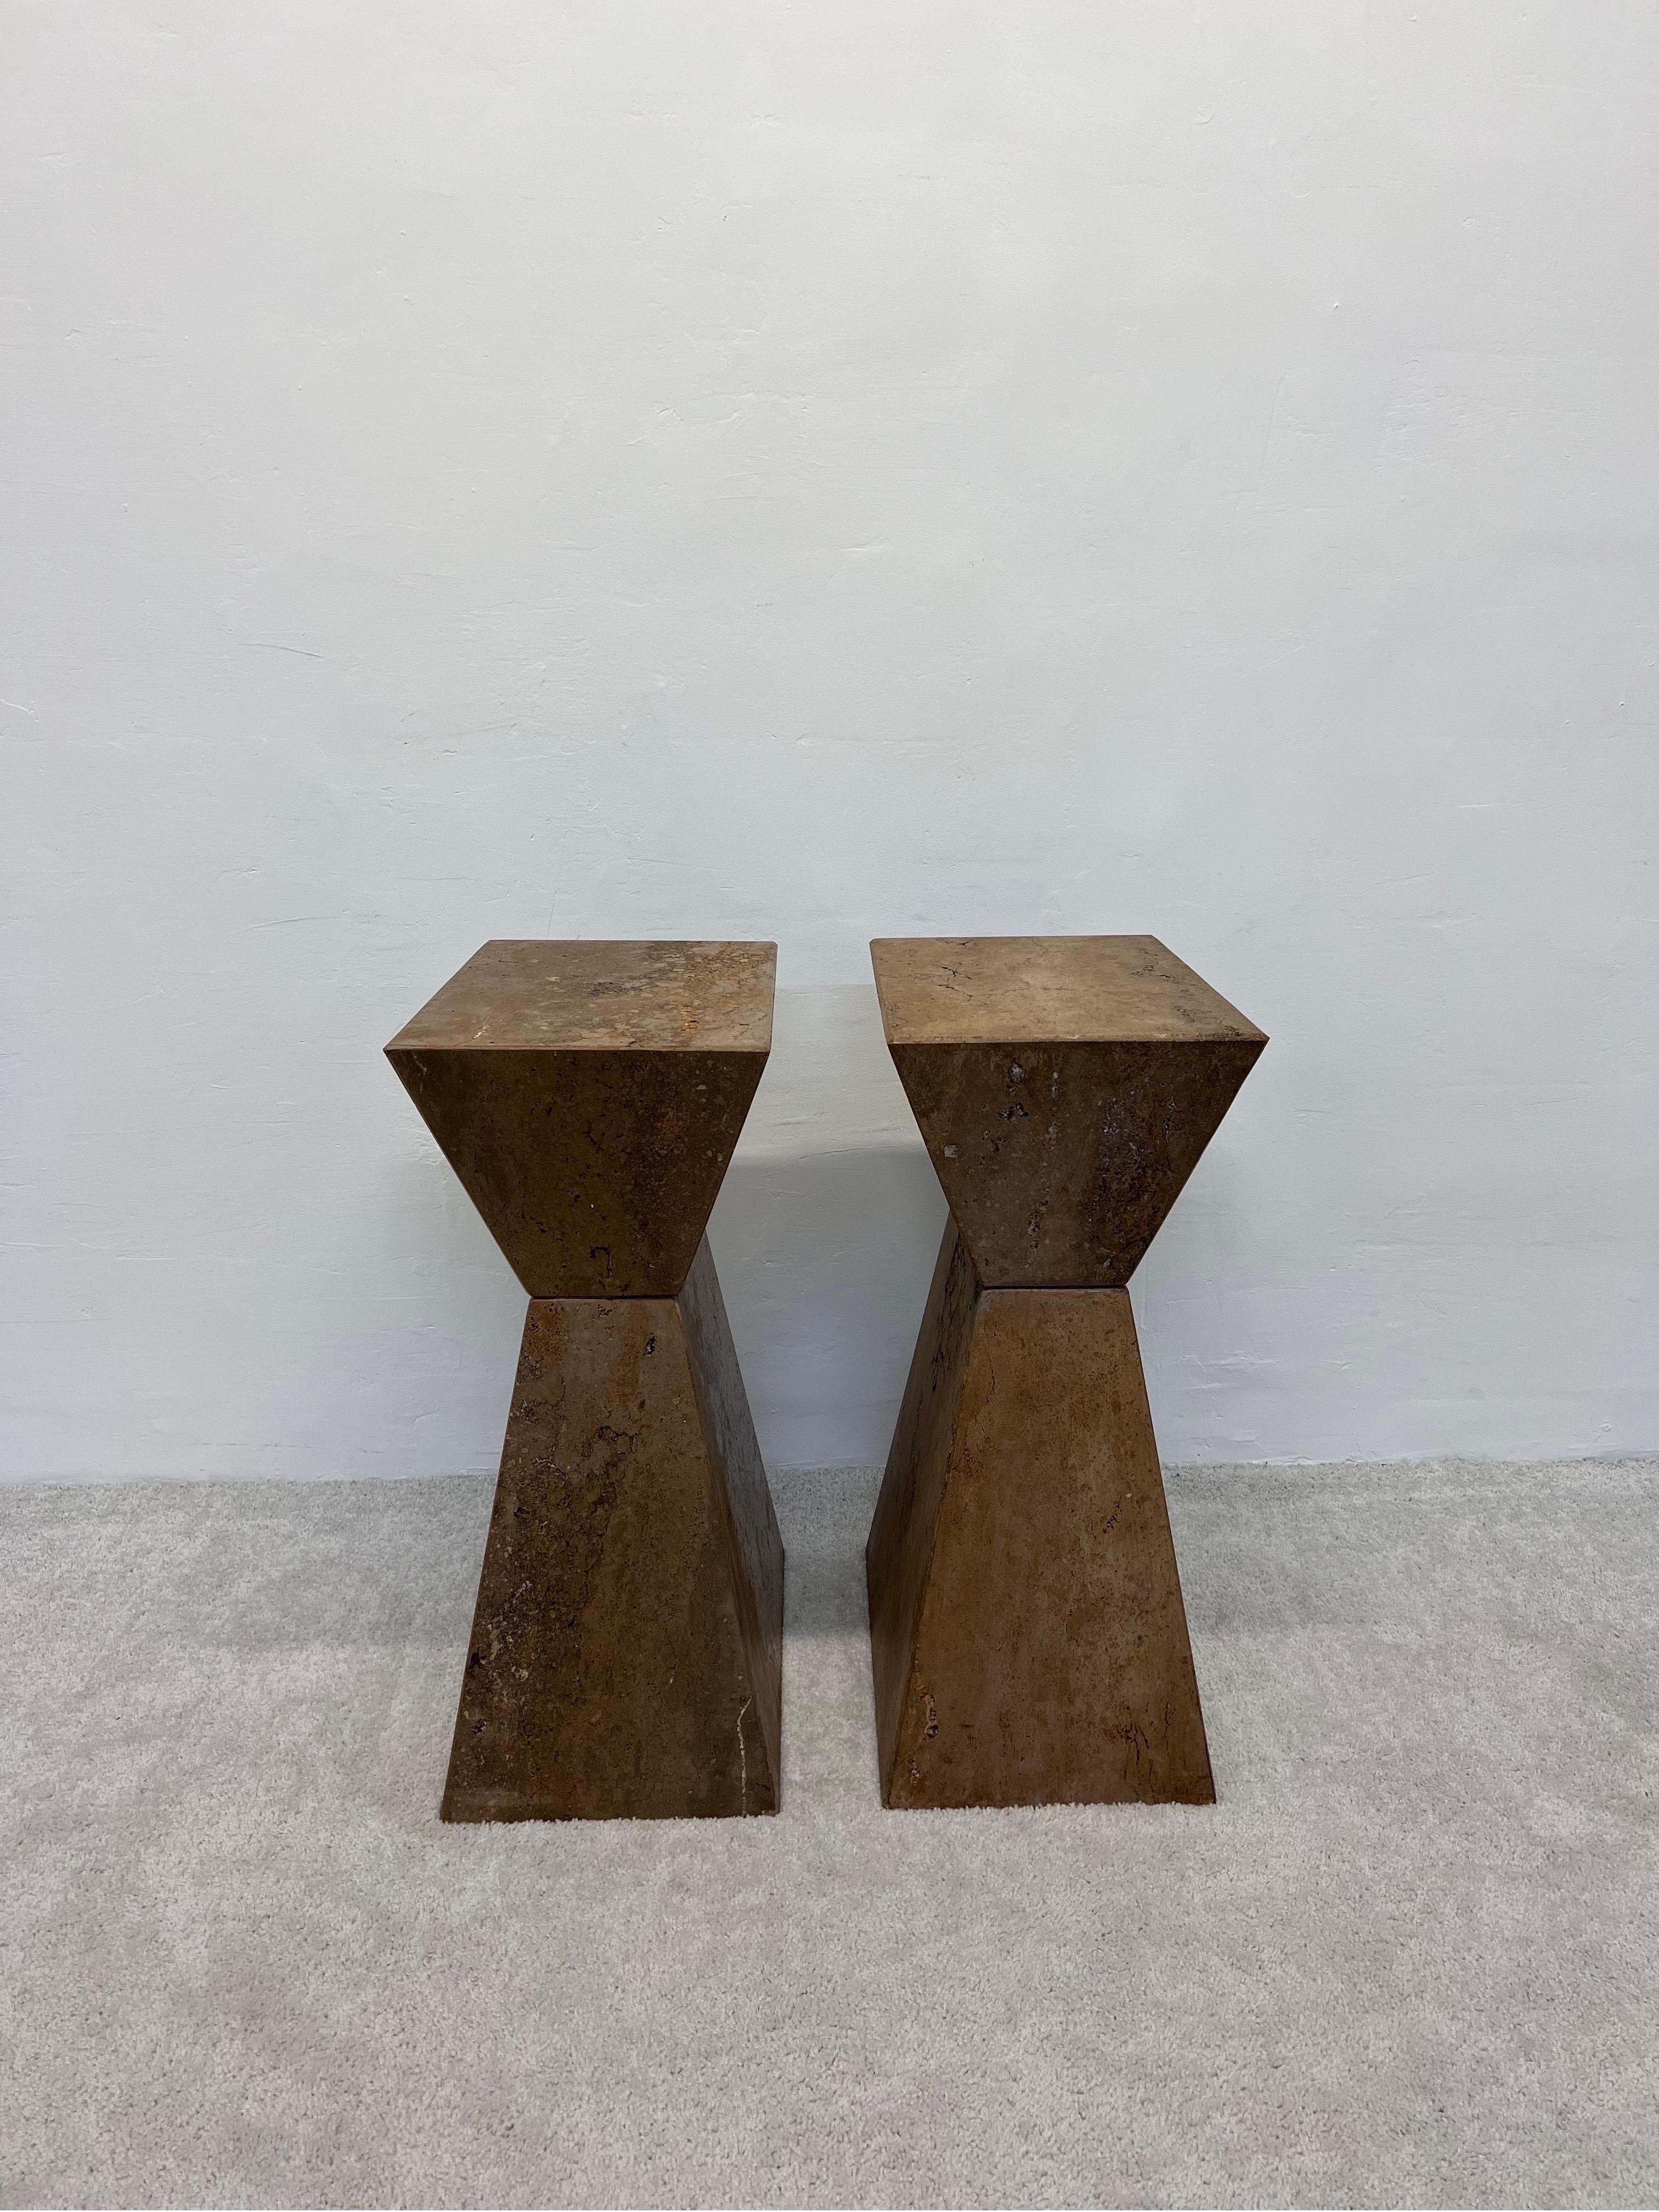 Post-Modern Geometric Faceted Italian Travertine Pedestal Tables, a Pair